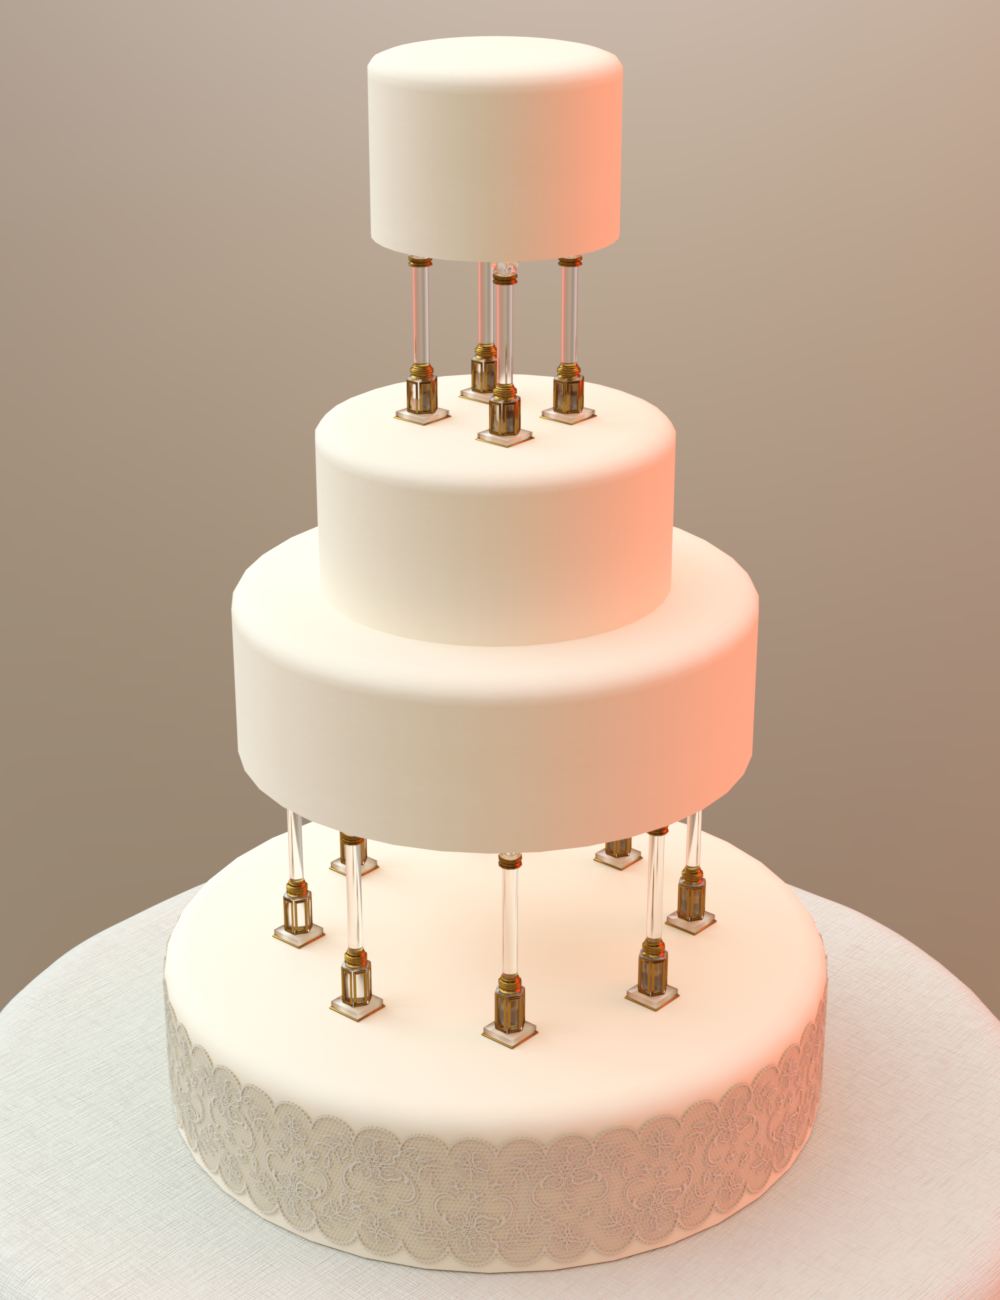 Cake, a WIP by L'Adair